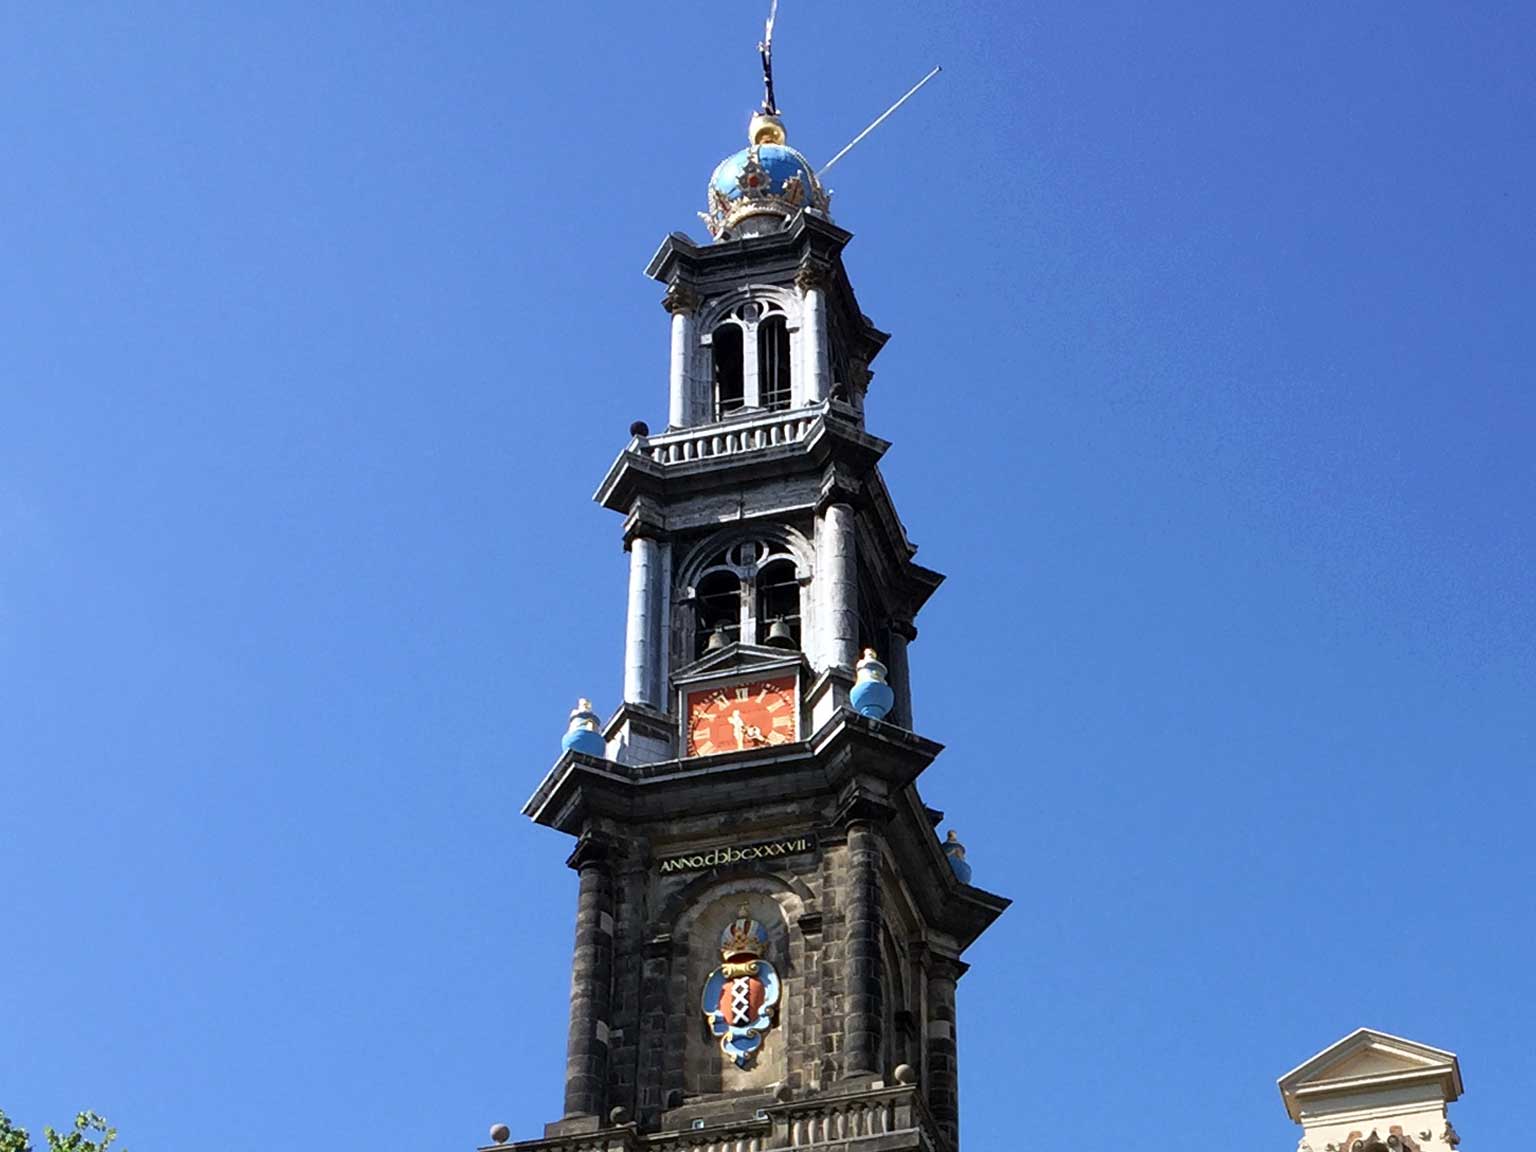 Westertoren, Amsterdam, spire with Rudolphinic crown